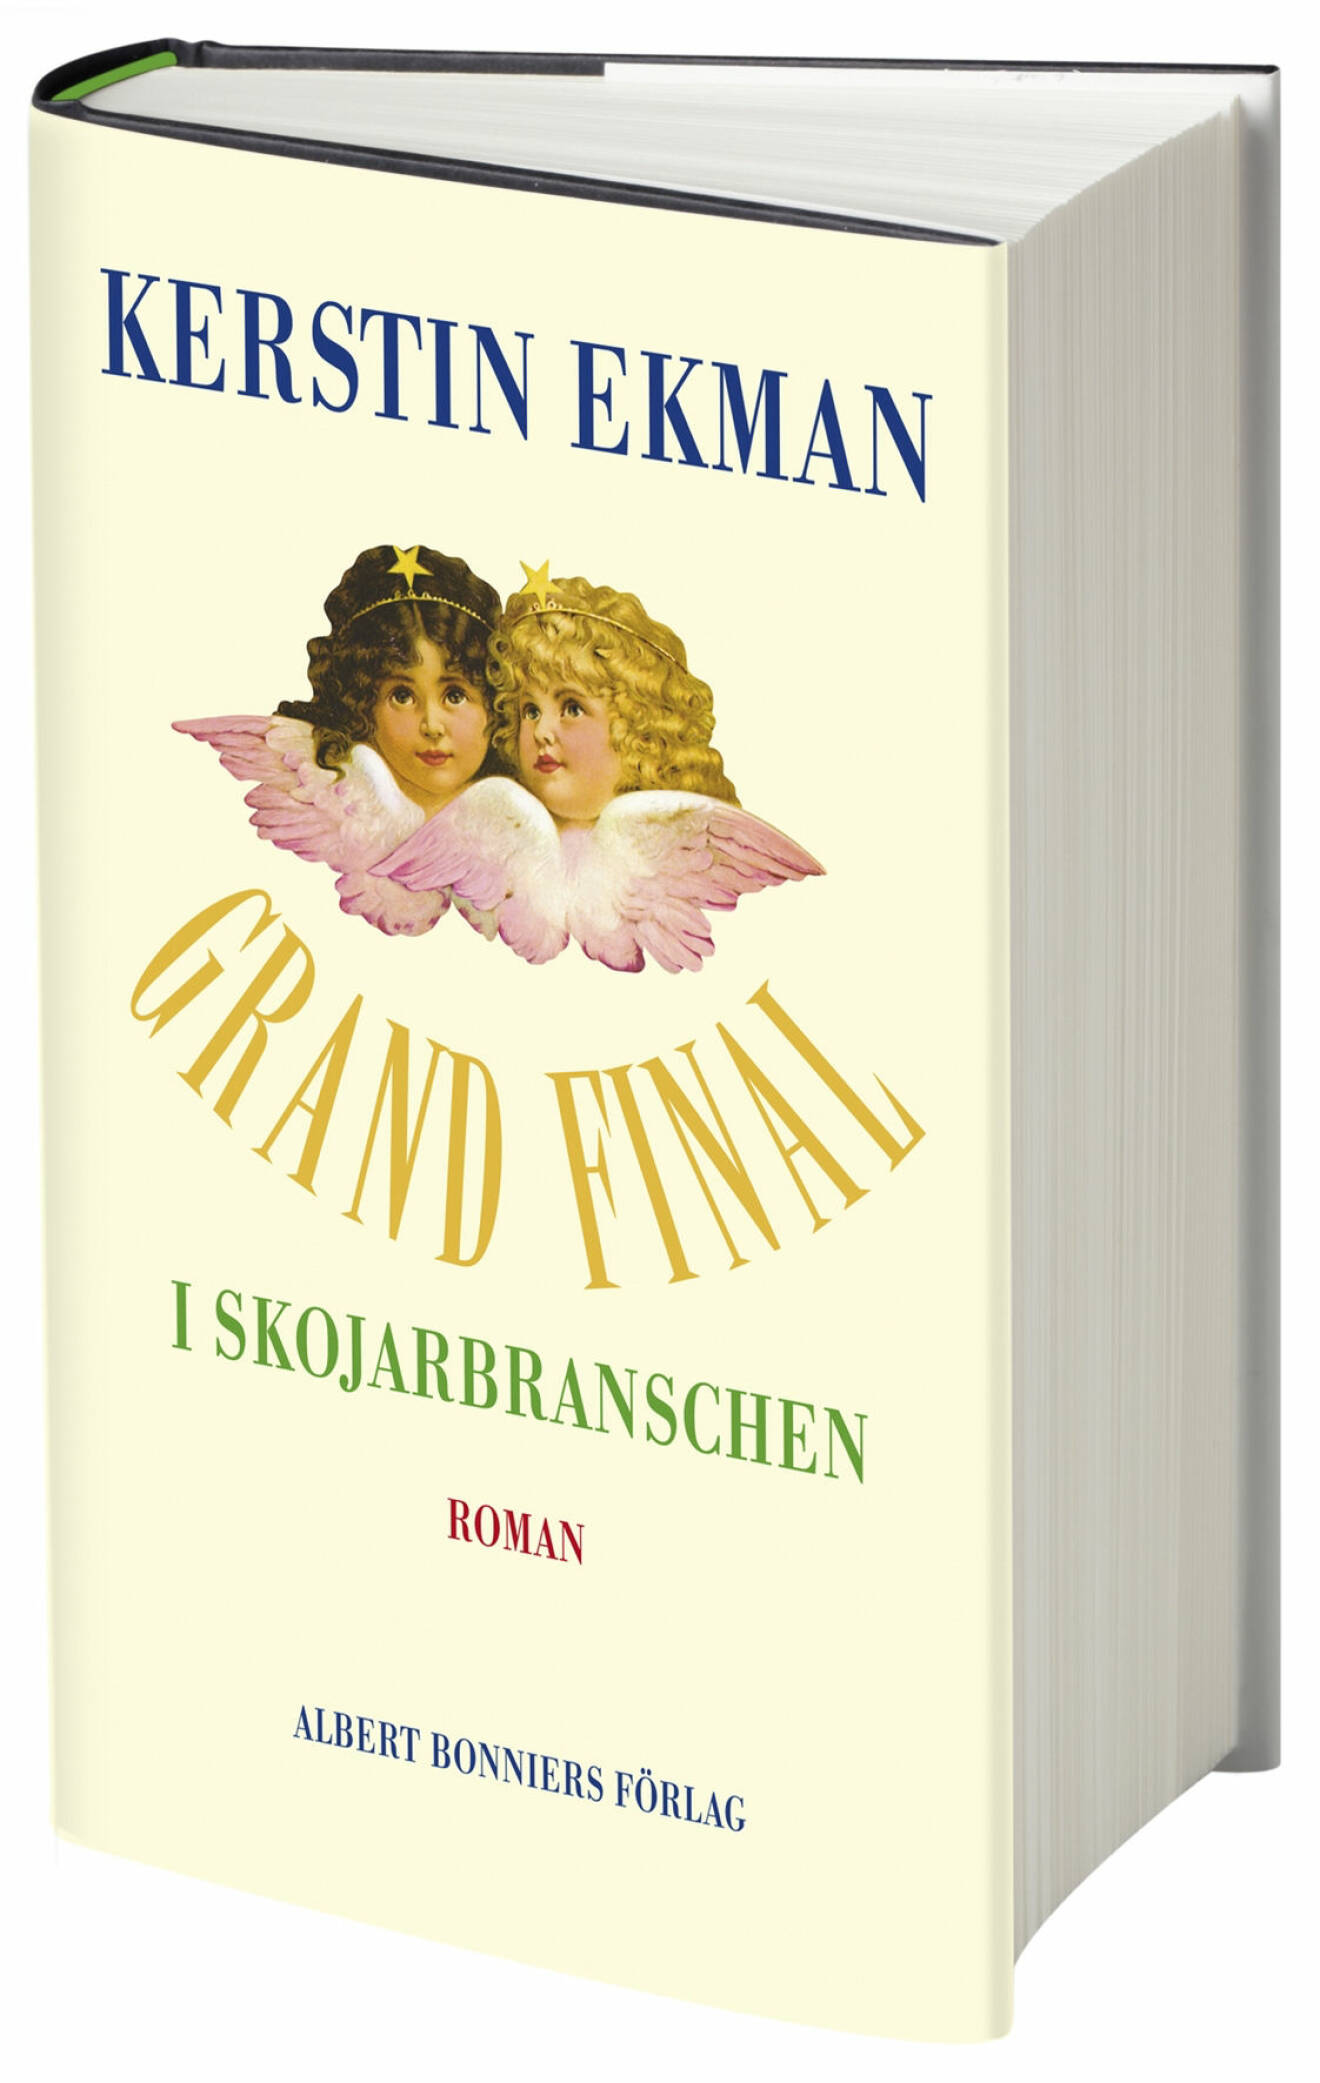 Grand final i skojarbranschen av Kerstin Ekman